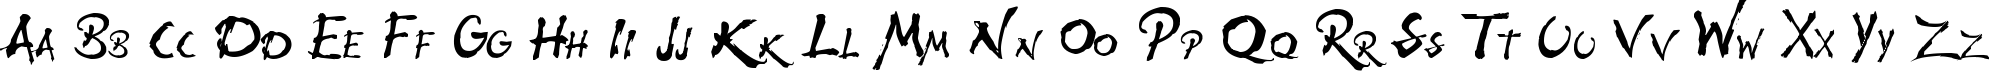 Пример написания английского алфавита шрифтом WolfsRain